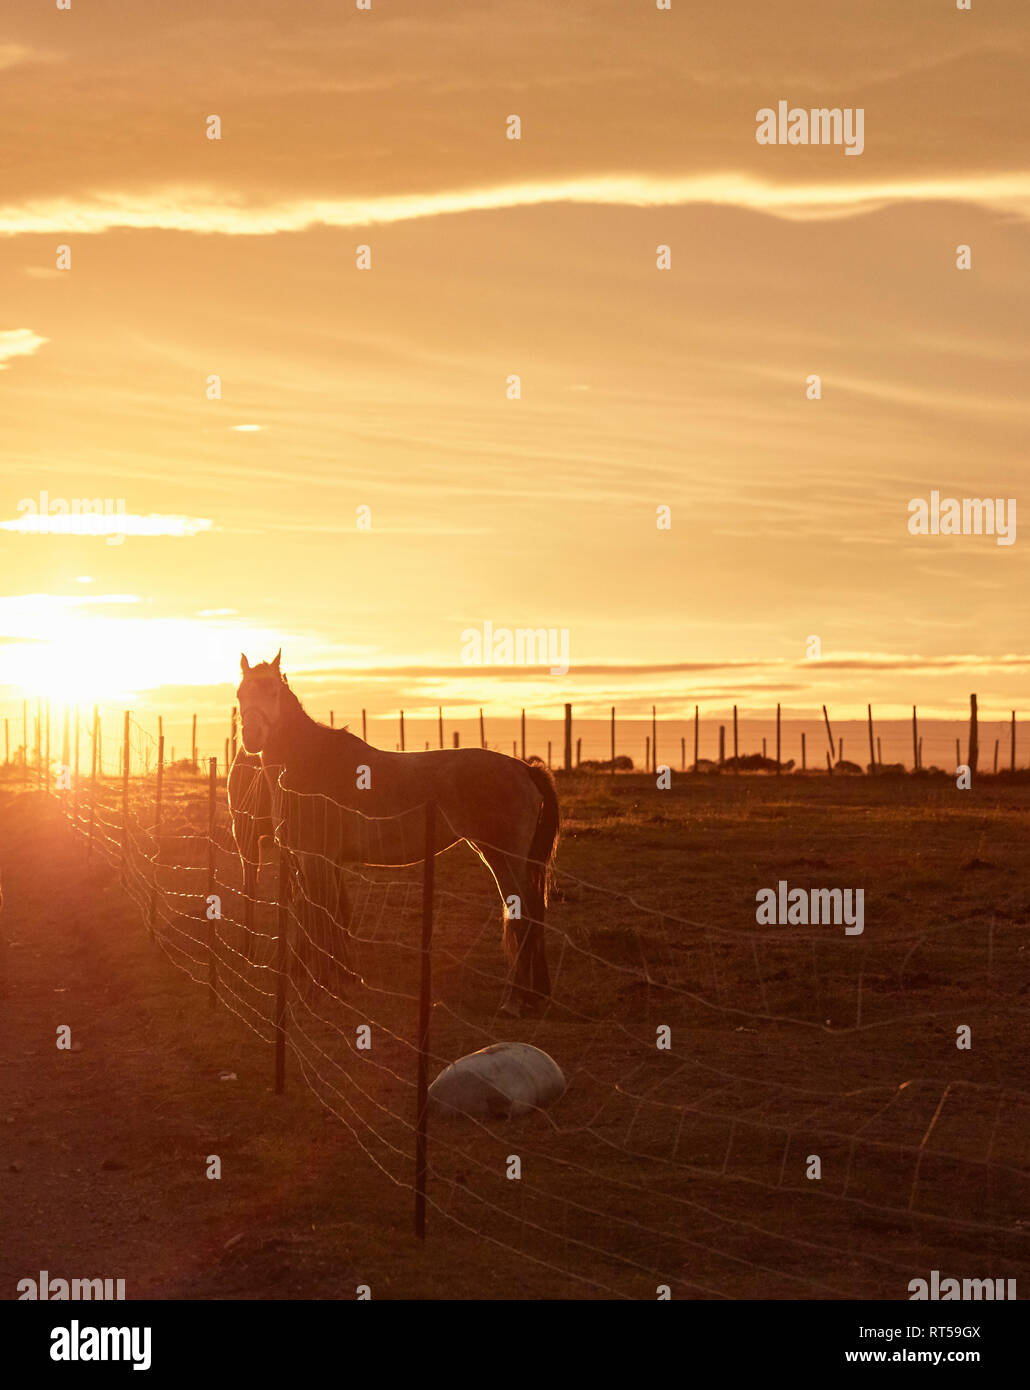 Chile, Tierra del Fuego, Porvenir, horses on paddock at sunset Stock Photo